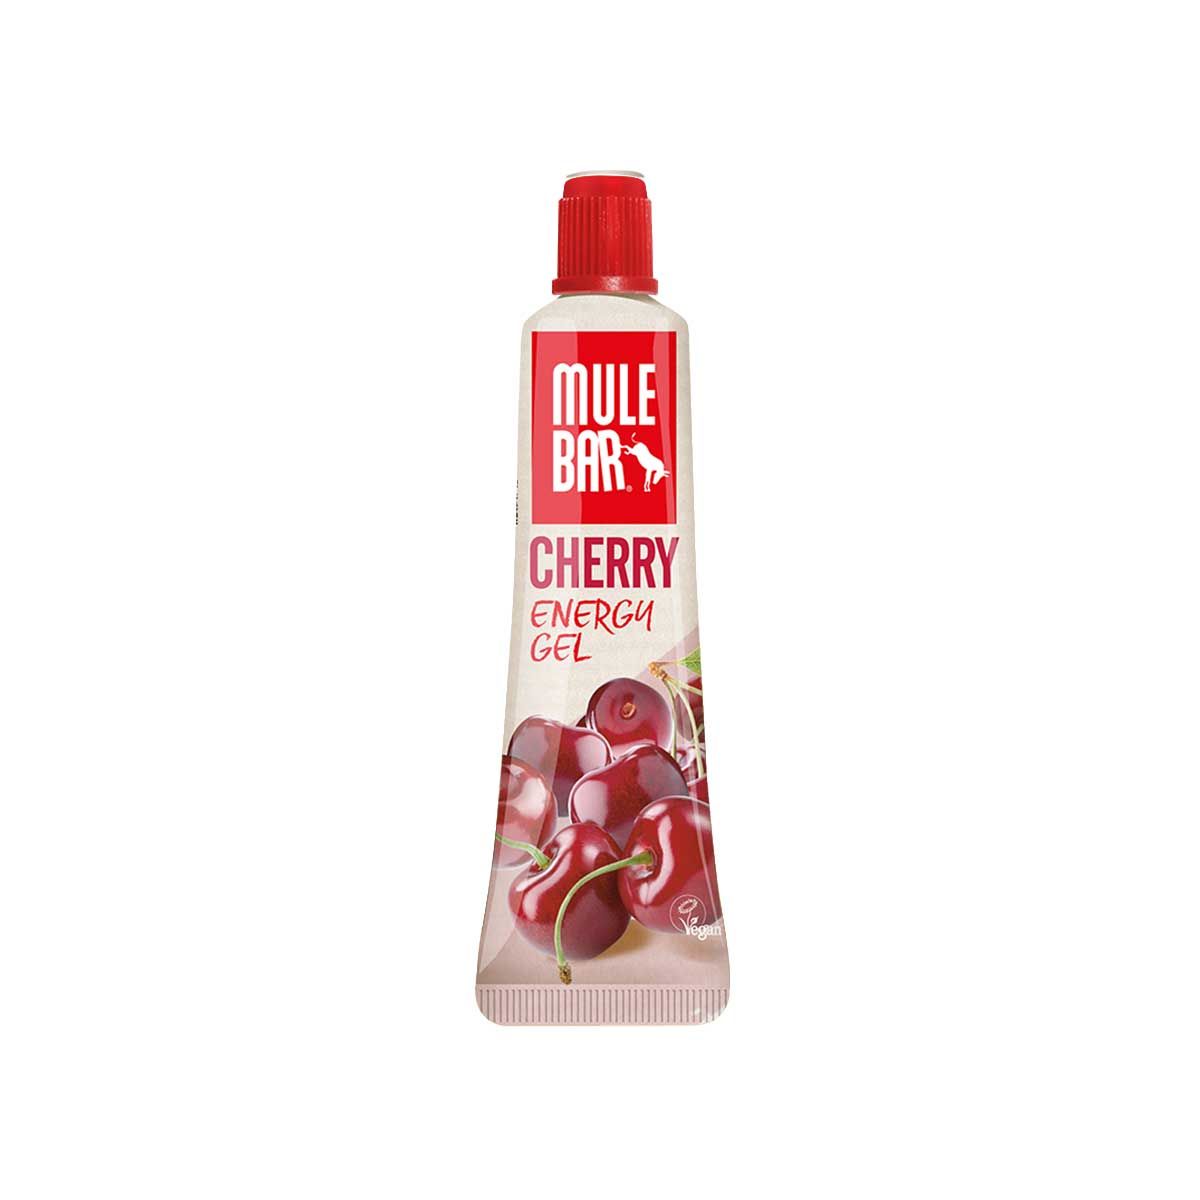 Mulebar energy gel - Cherry